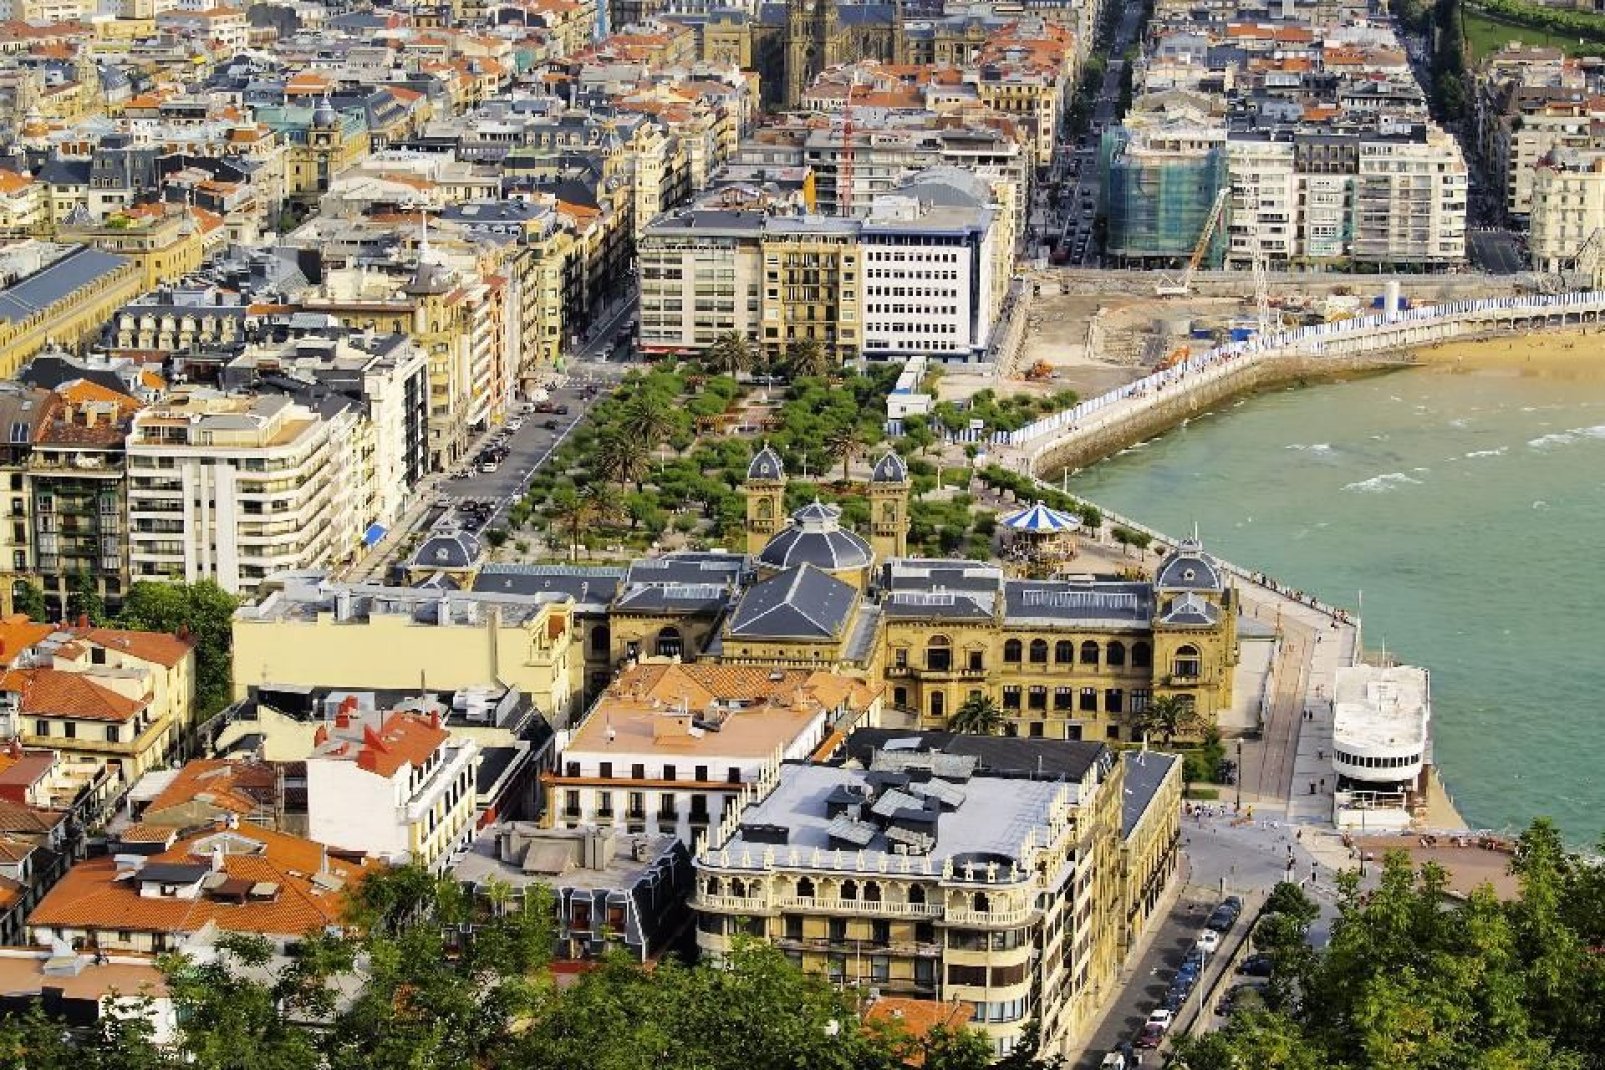 Donostia en vasco significa San Sebastián.